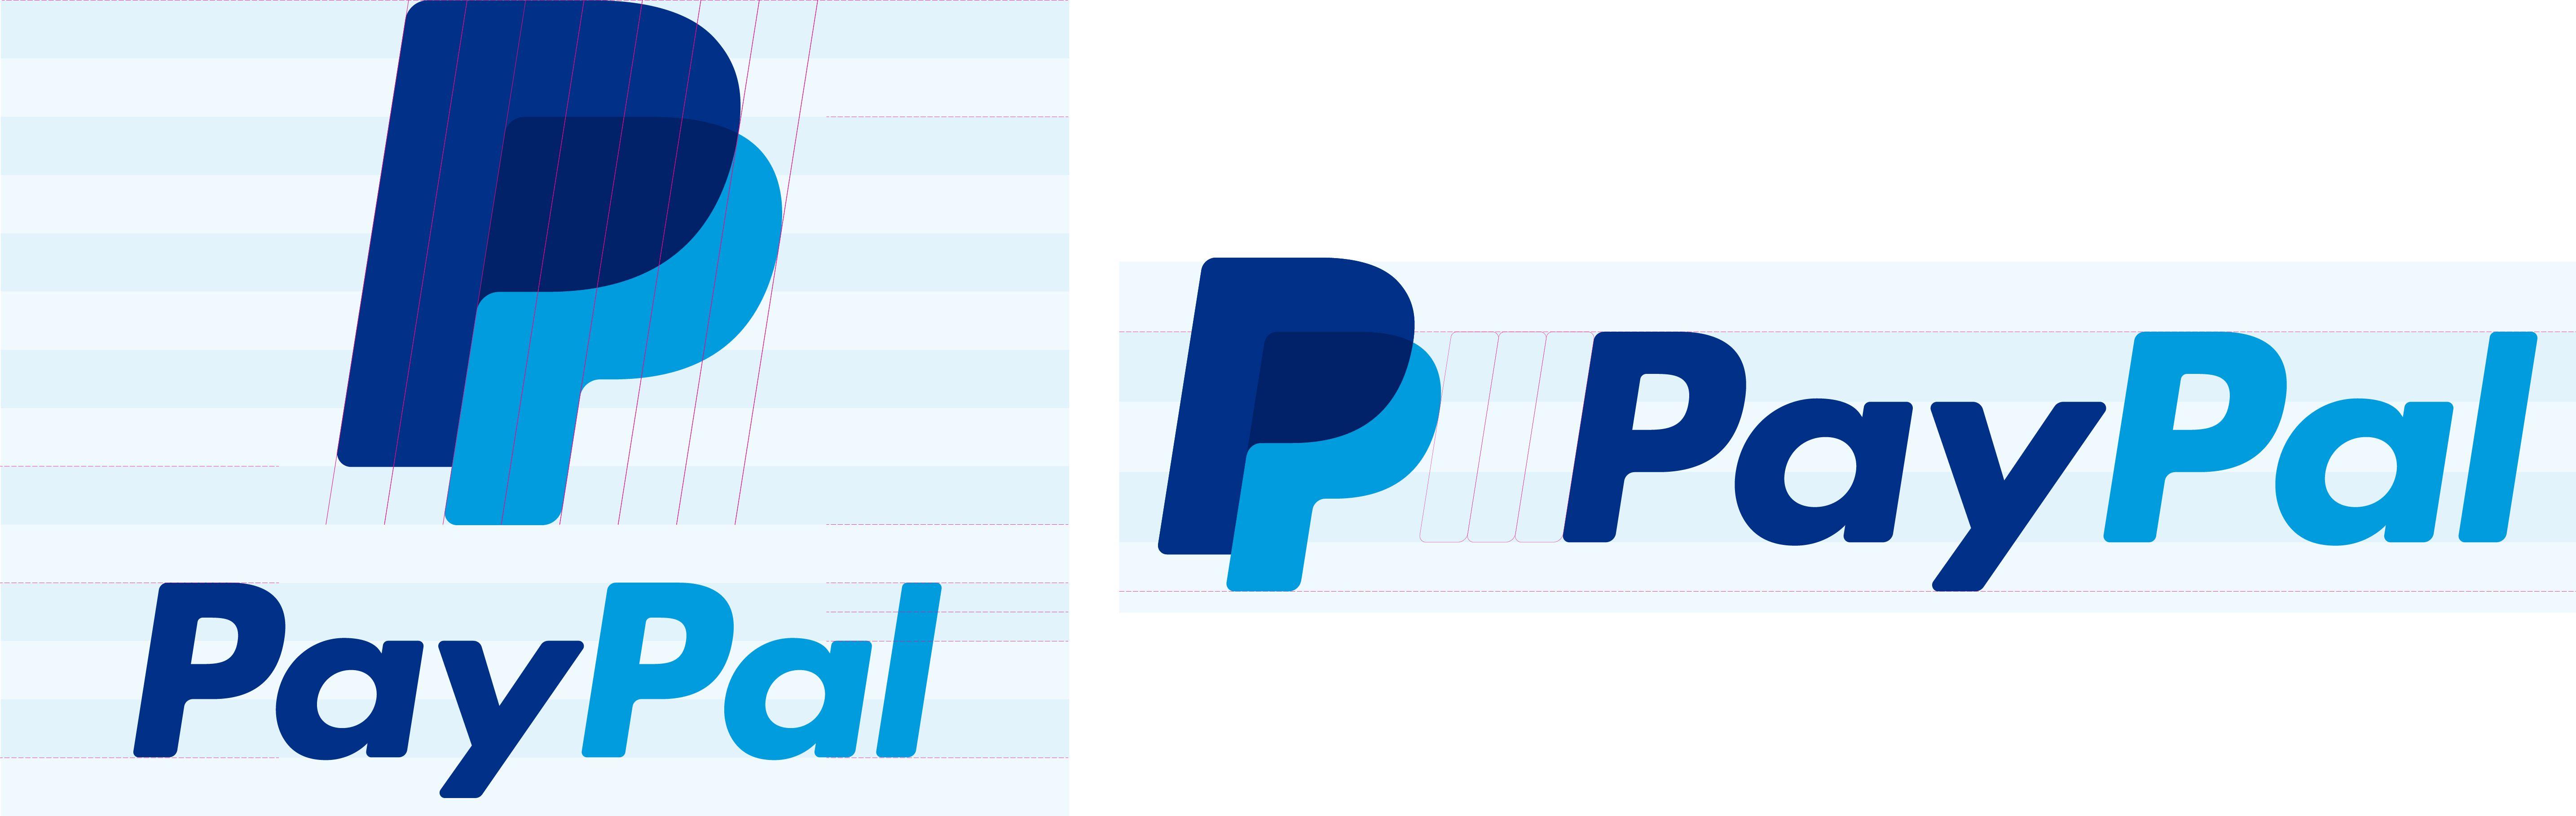 paypal app logo